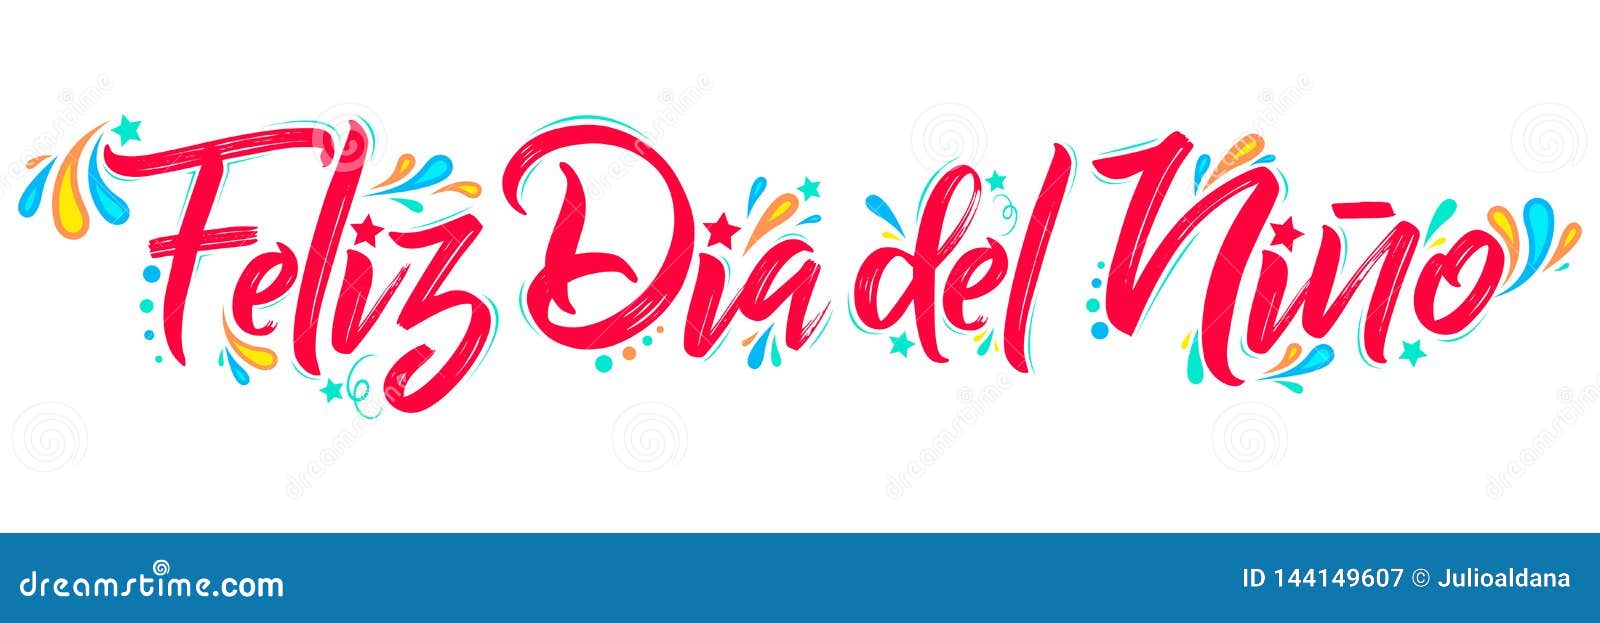 feliz dia del nino, happy children day  spanish text,  lettering  